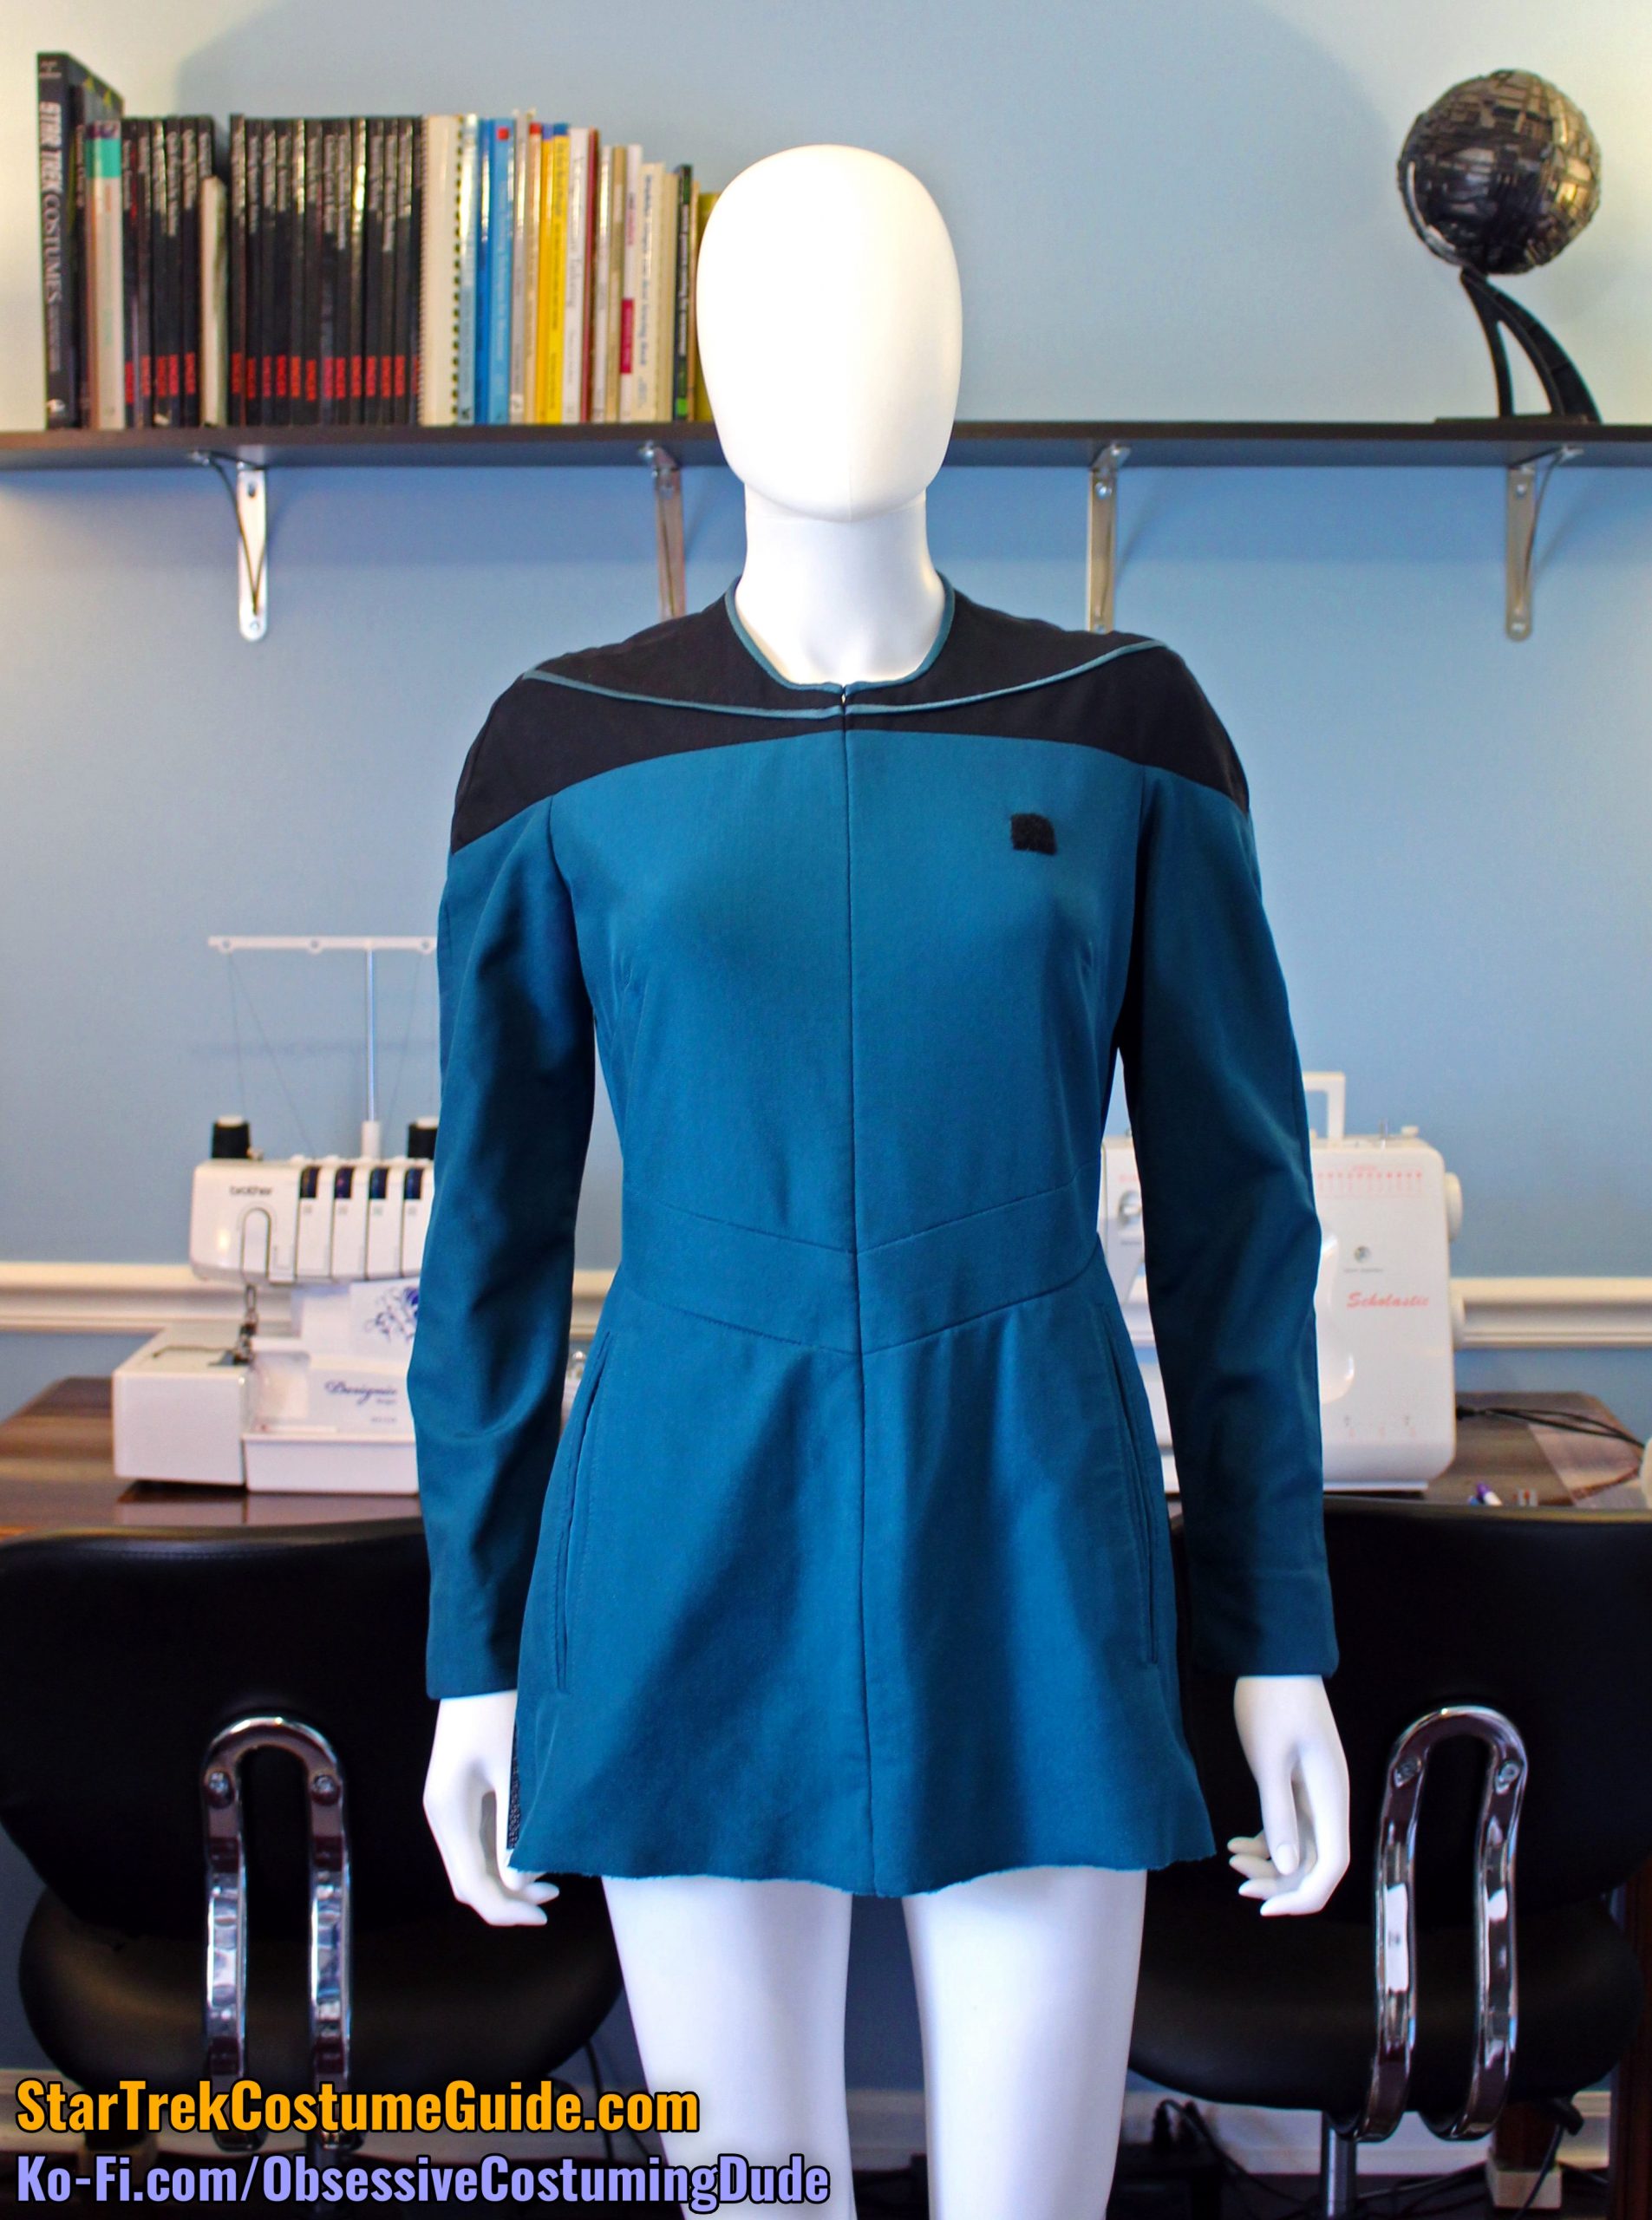 Free TNG medical smock pattern download - Star Trek Costume Guide